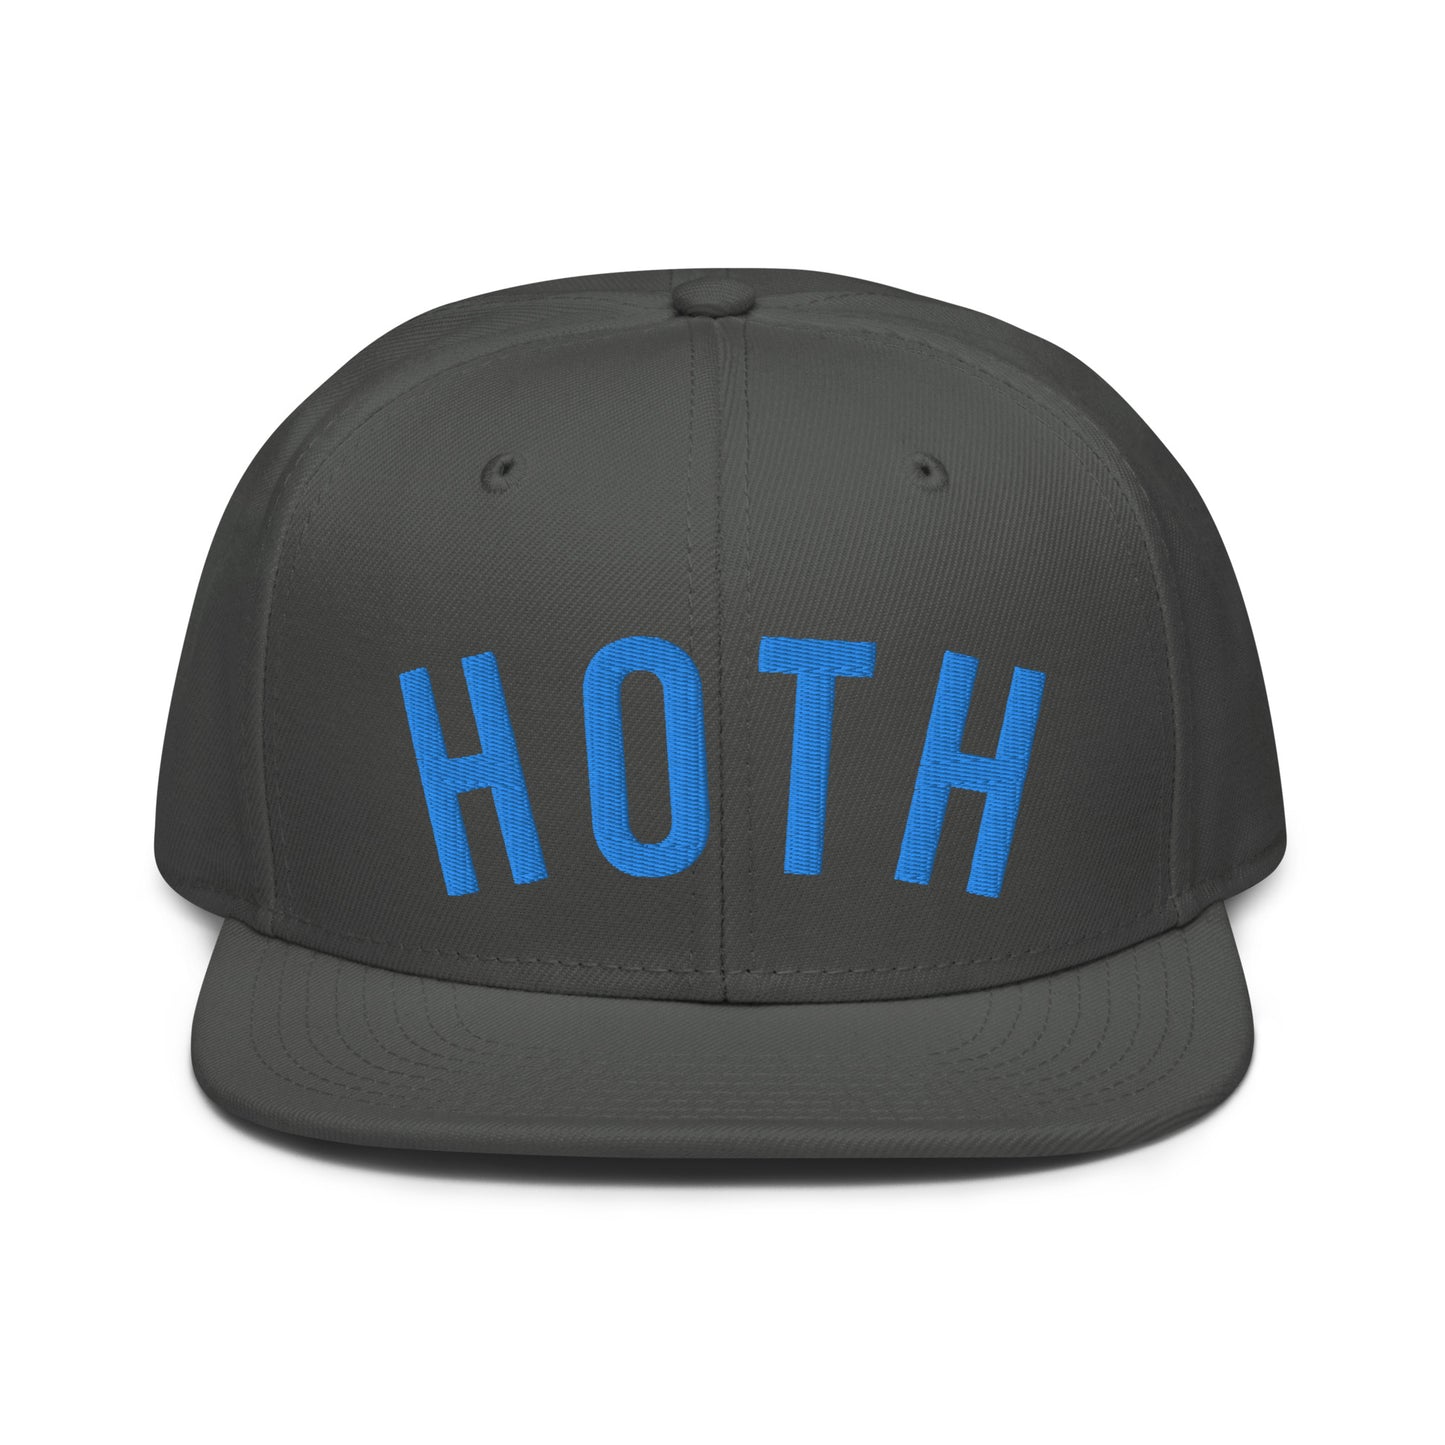 Hoth Home Team snapback hat